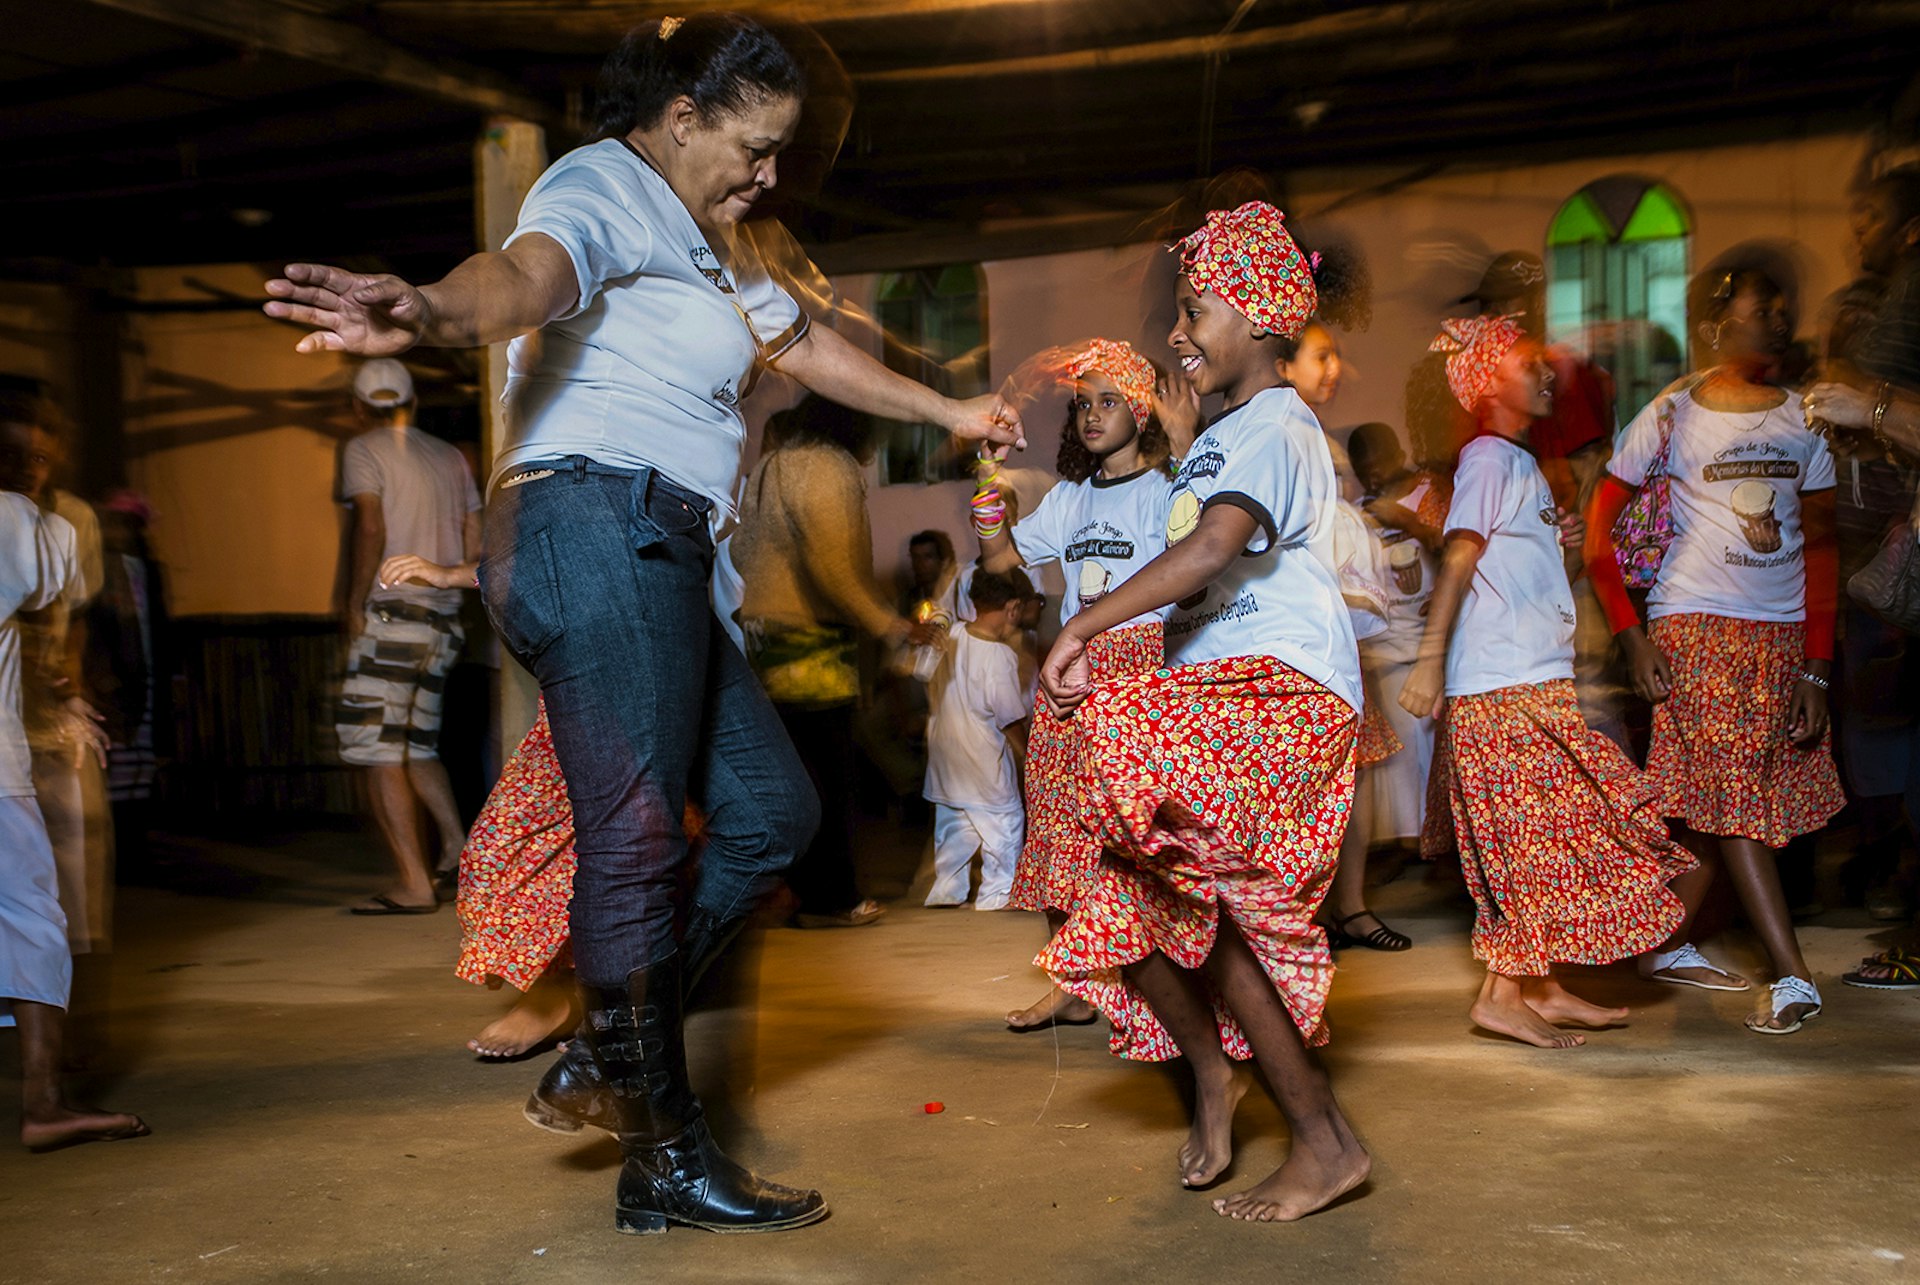 A woman and child dance at a jongo festival in São Jose de Serra © Igor Alecsander / shutterstock